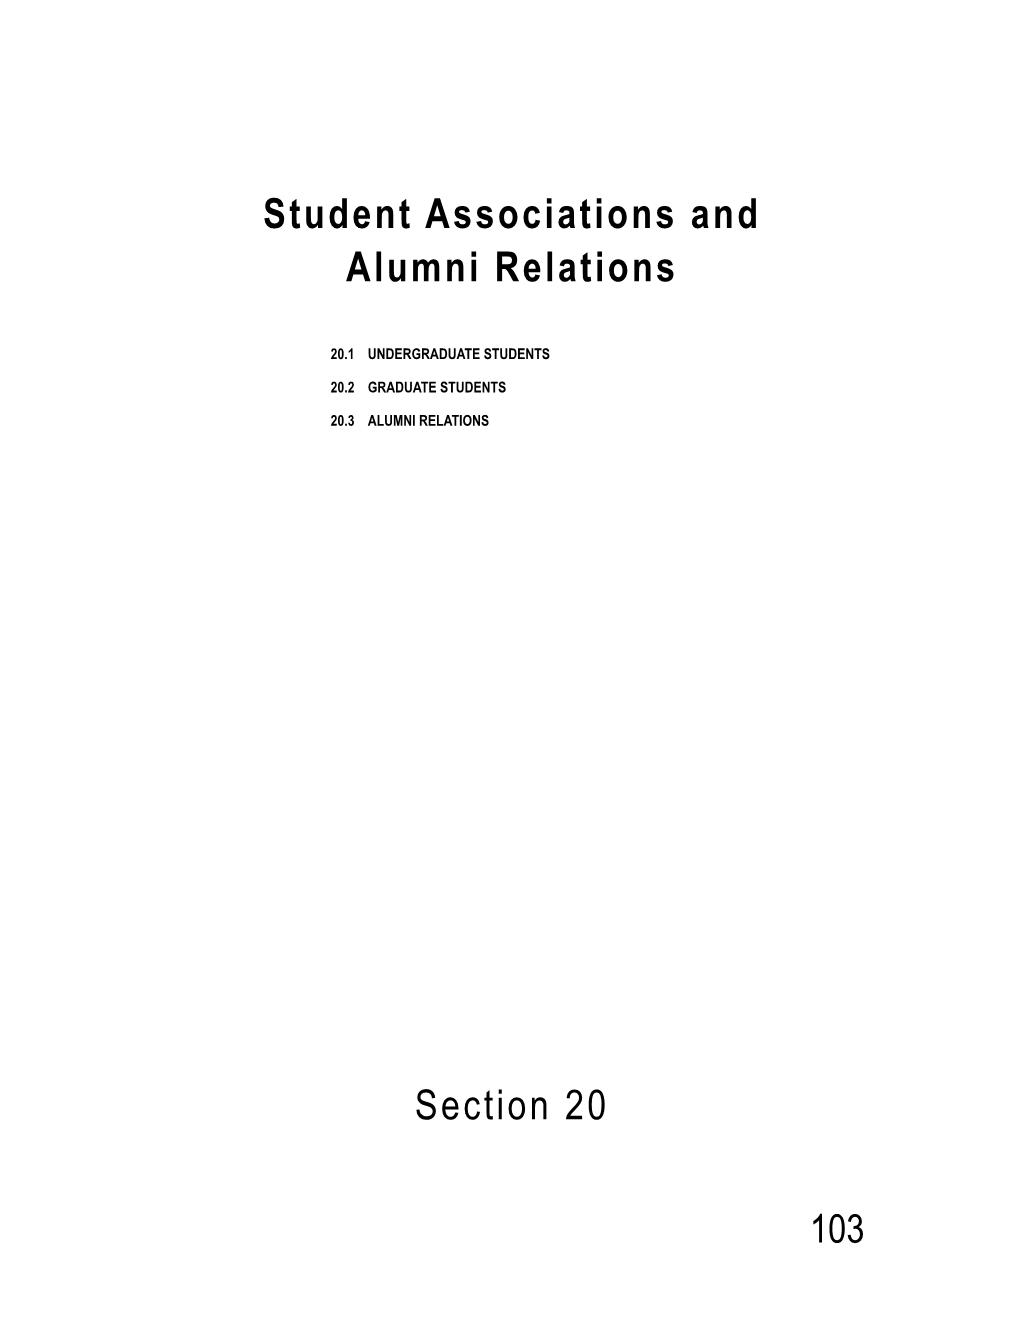 Student Associations and Alumni Relations